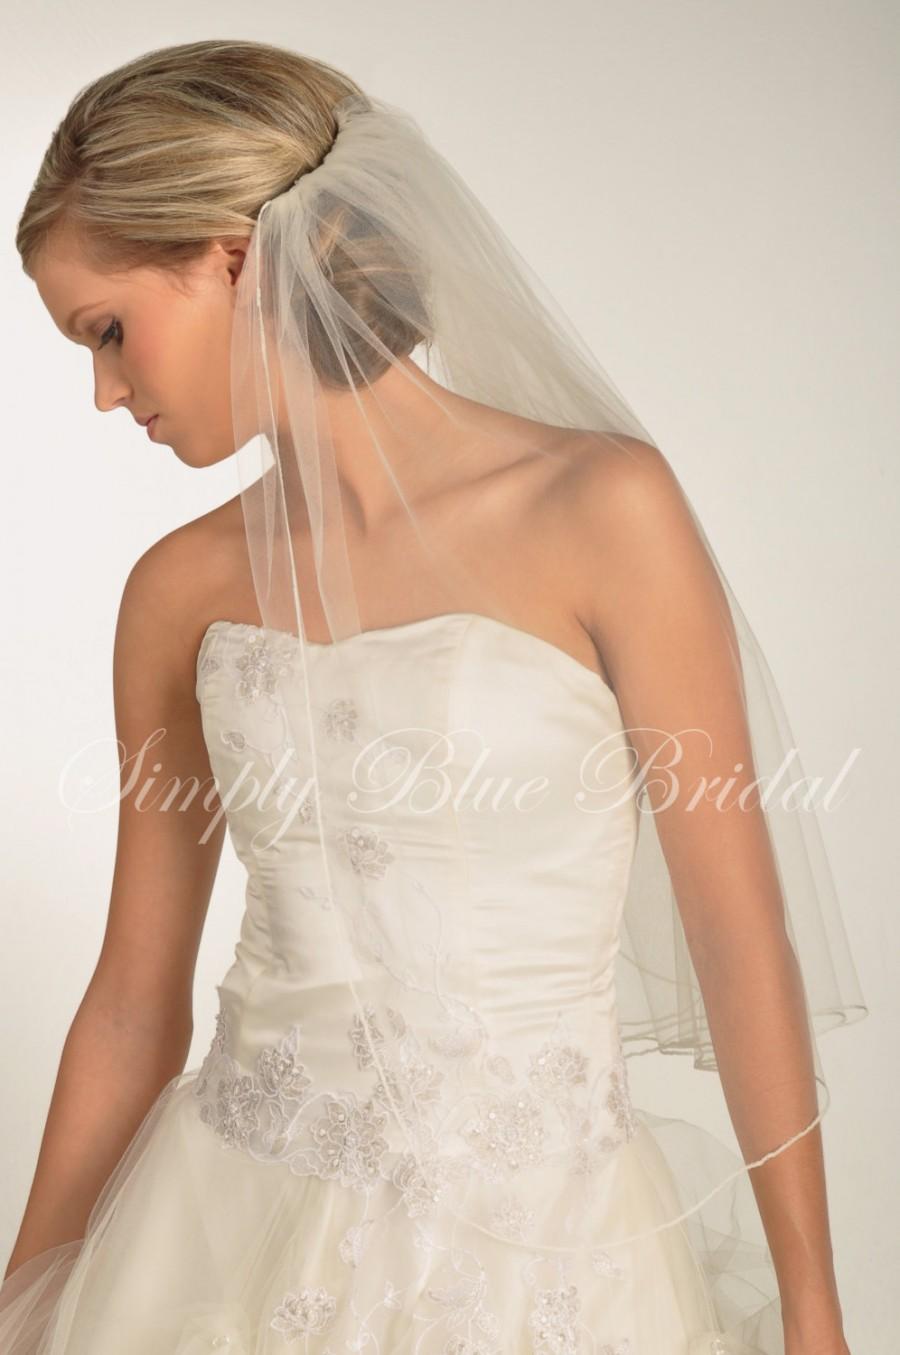 Mariage - Veil for Brides, Short Veil - Simply Pencil Edge Veil - Elbow or Fingertip Length